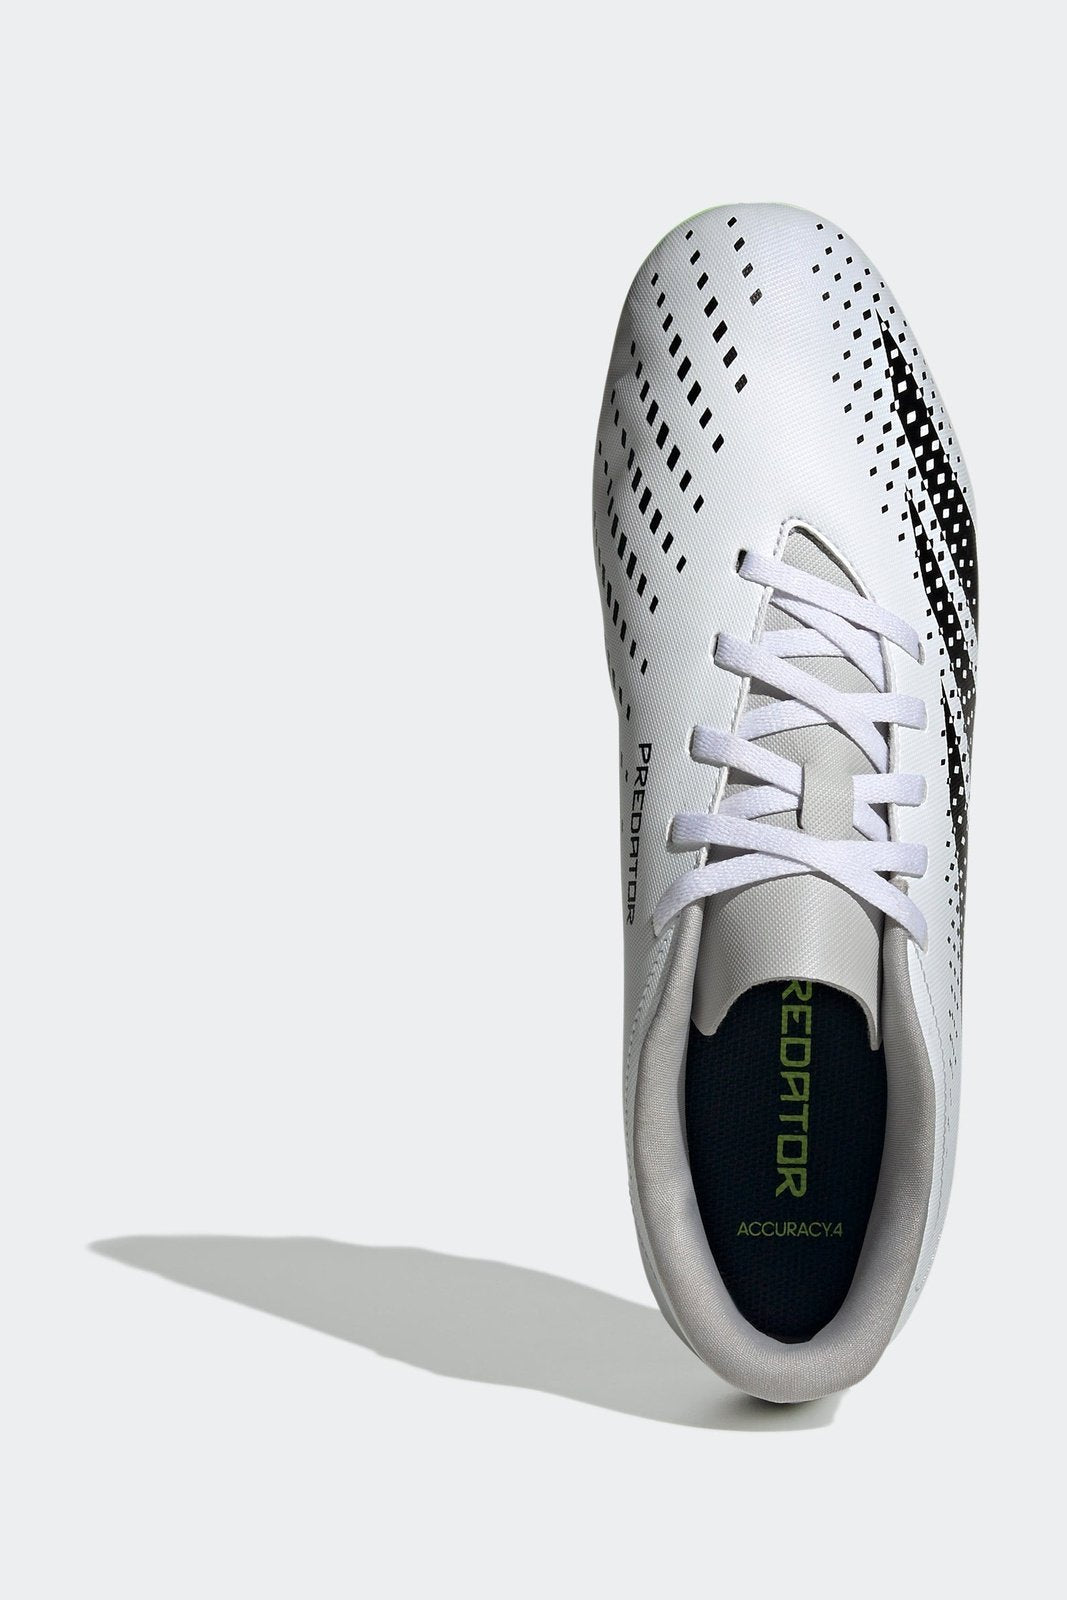 ADIDAS - נעלי קטרגל PREDATOR PRECISION.4 בצבע לבן לגברים - MASHBIR//365